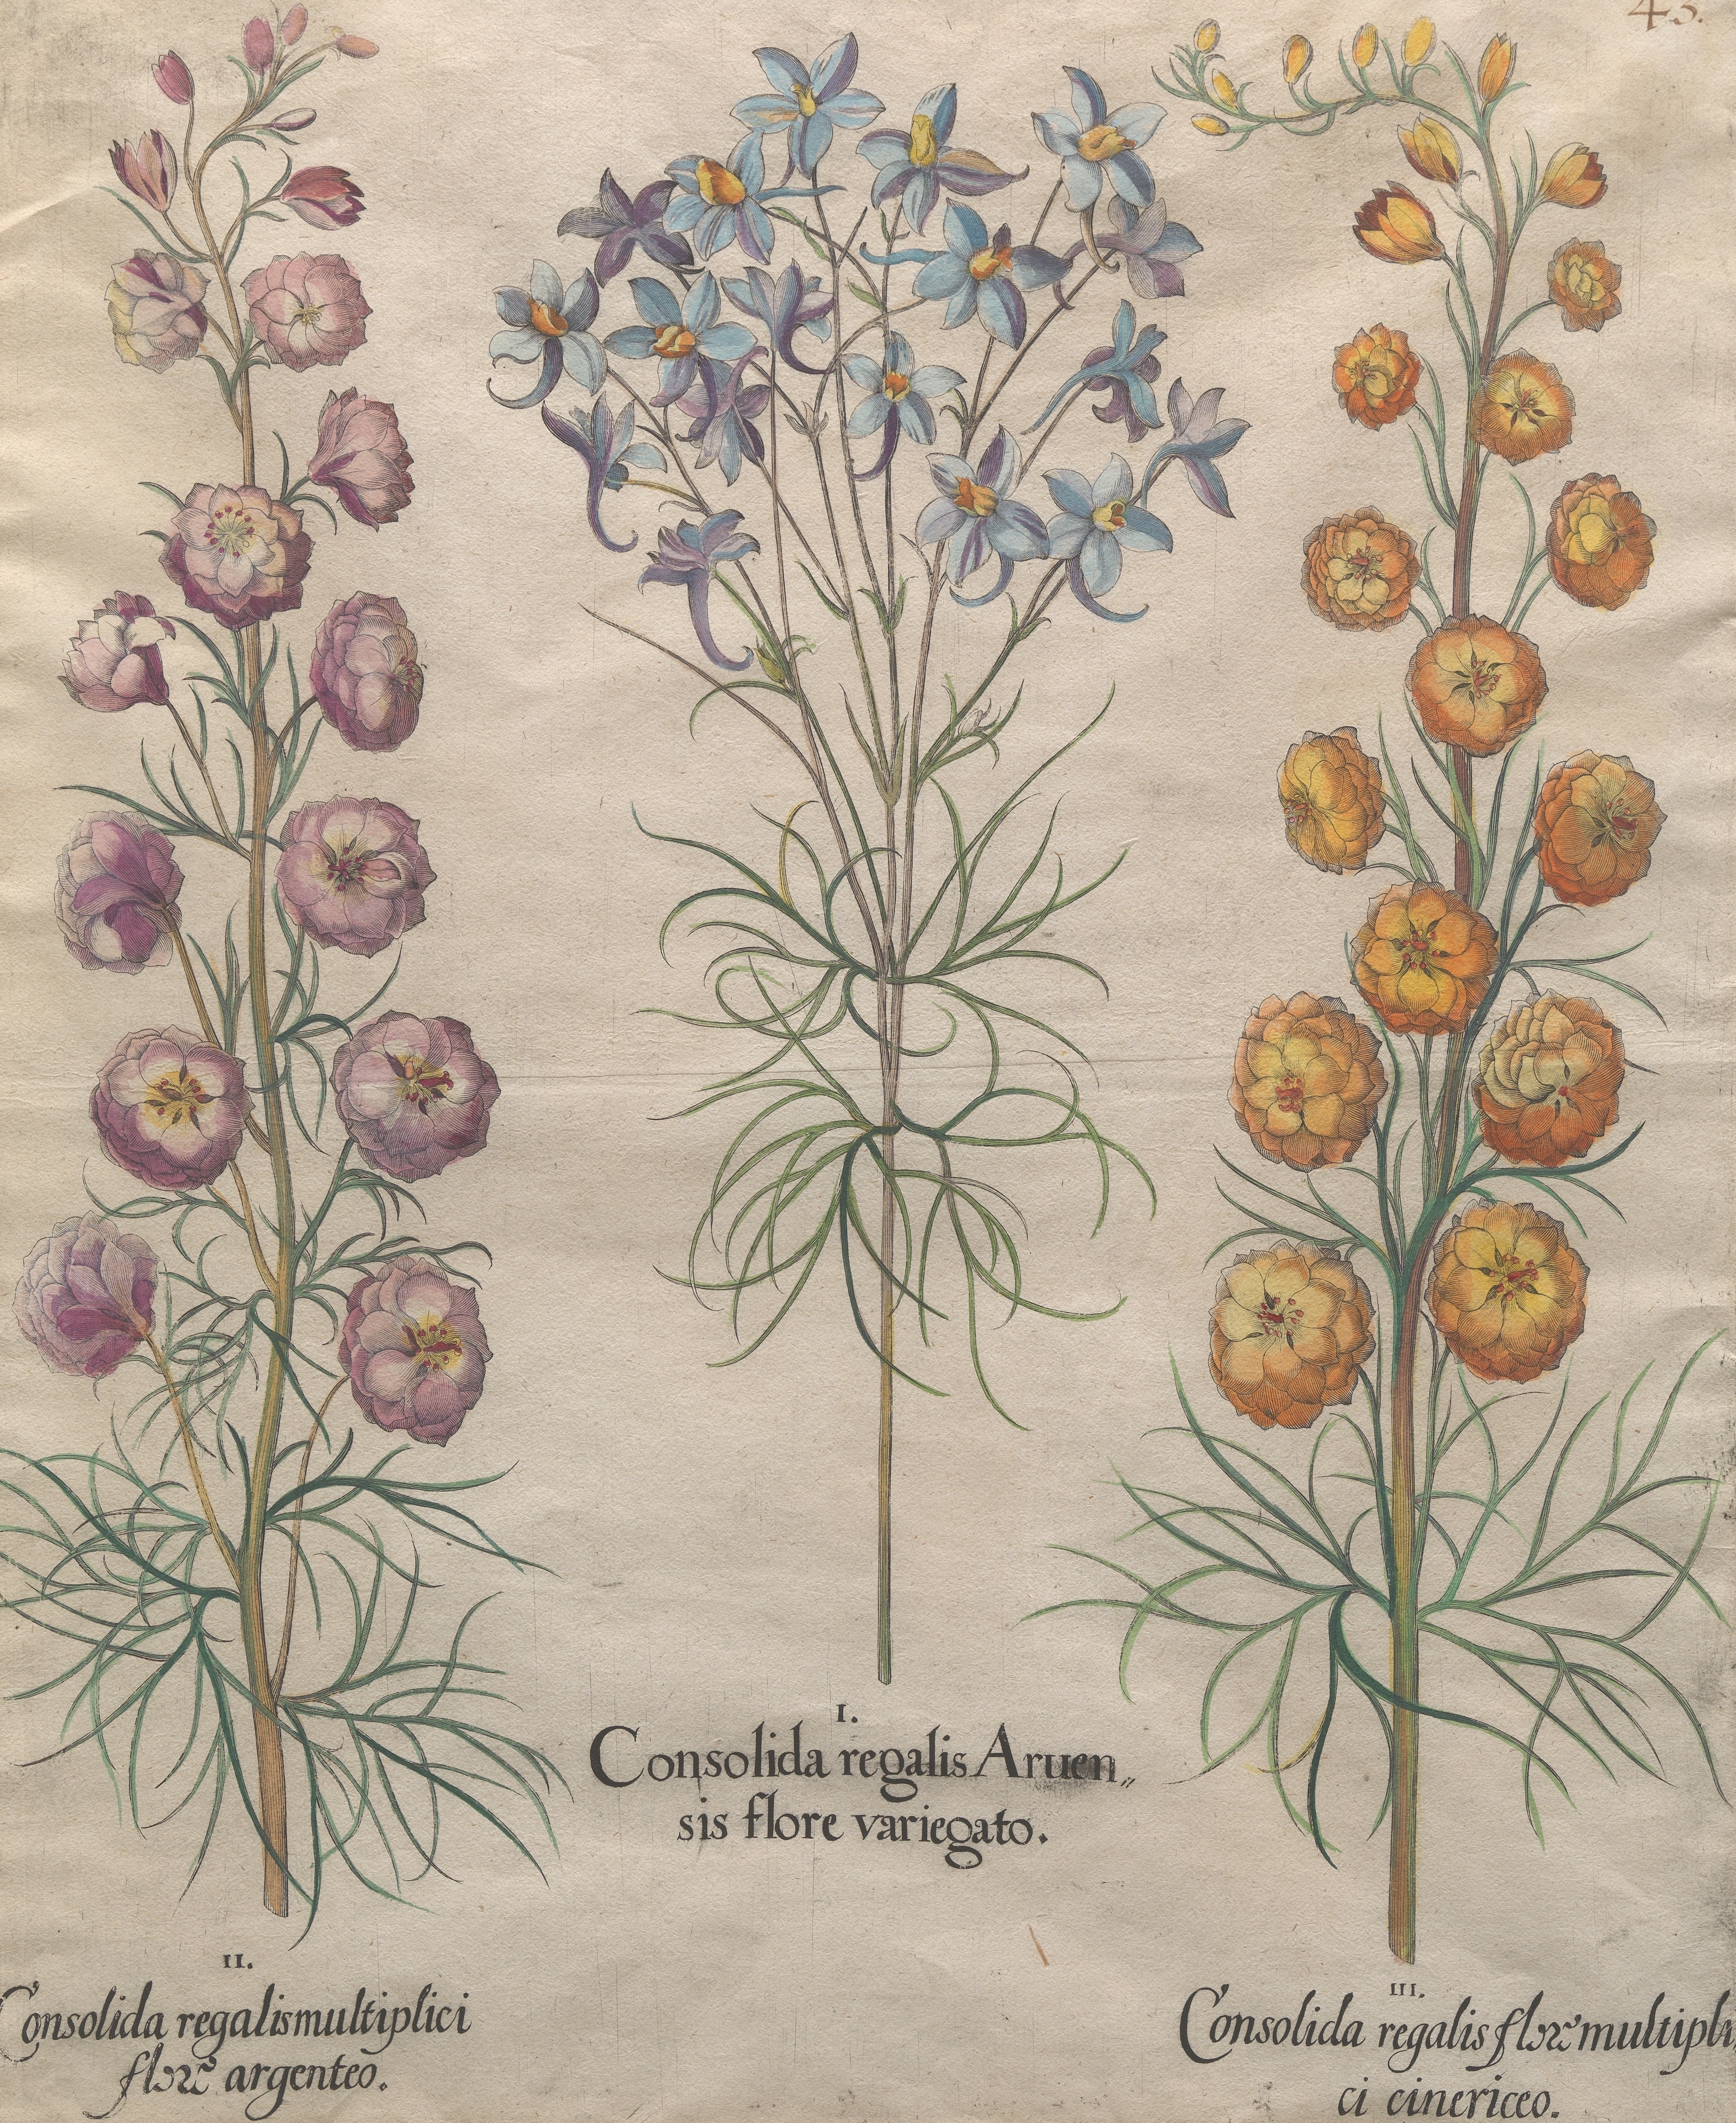 Artwork by Basilius Besler, Consolida regalis Aruen sis flore variegato, Made of Hand-colored copper botanical engraving on laid paper